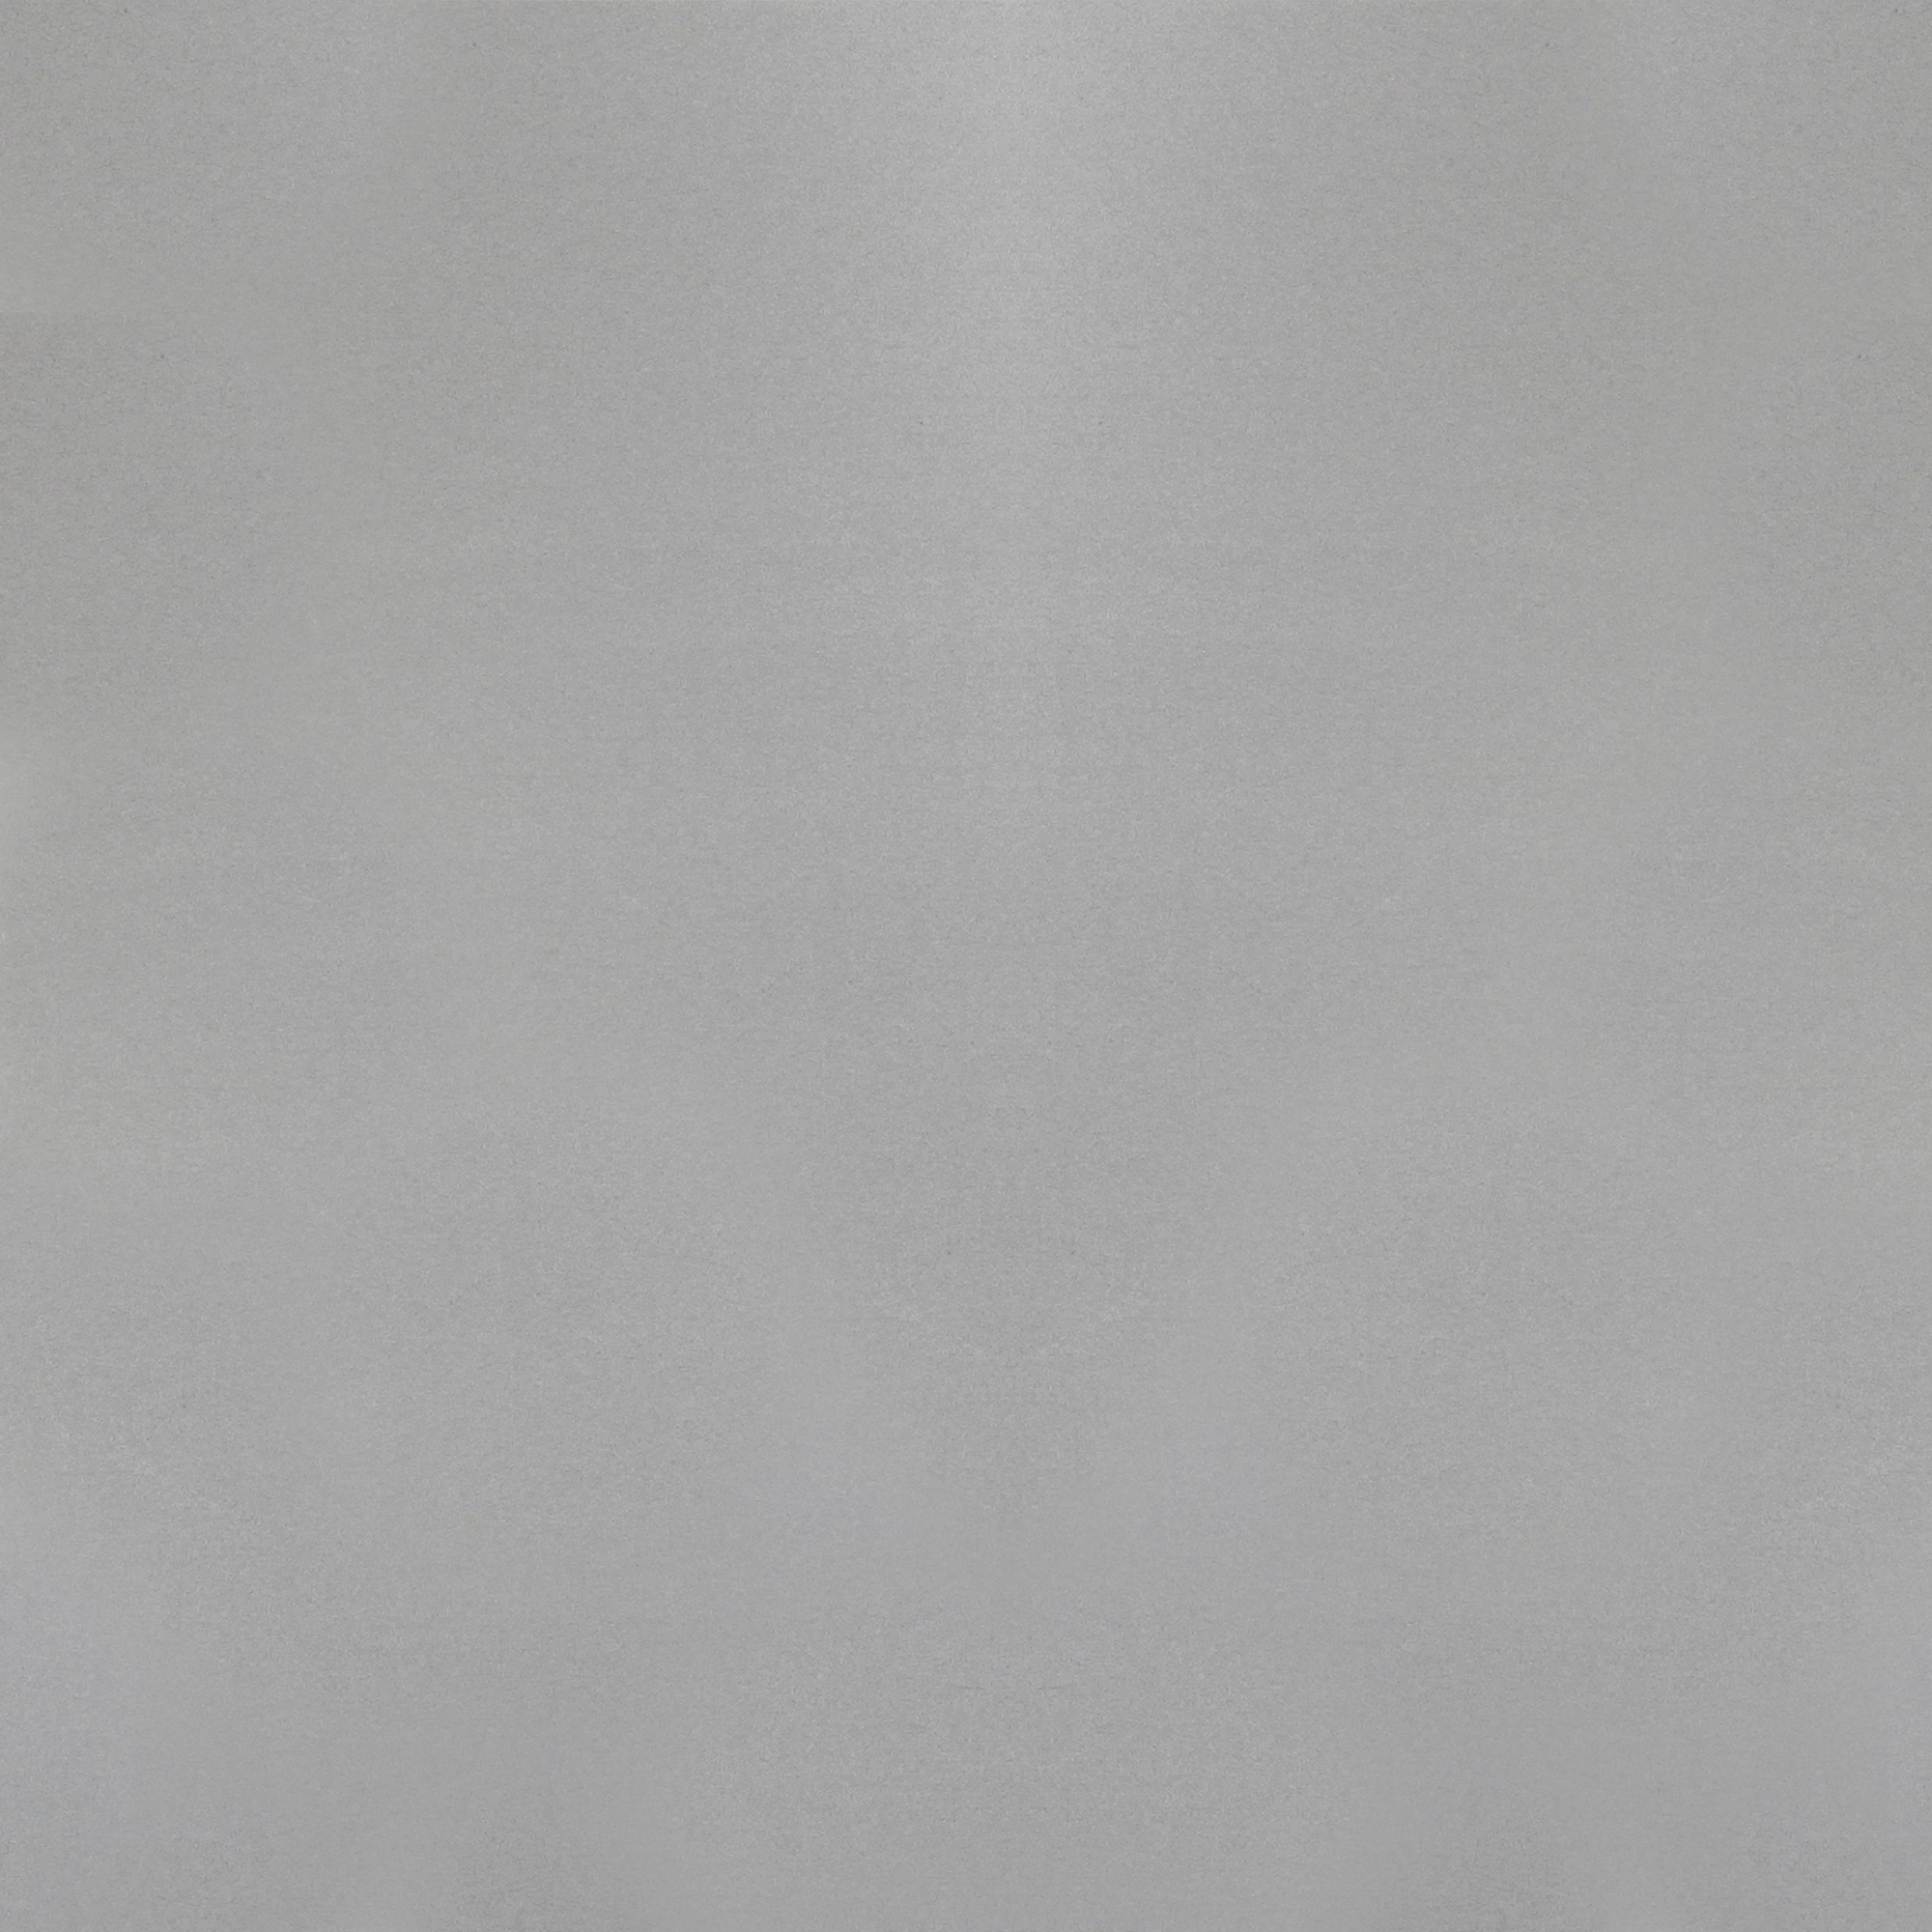 Glattblech Alu Blank 600 mm x 1000 mm x 1,5 mm kaufen bei OBI